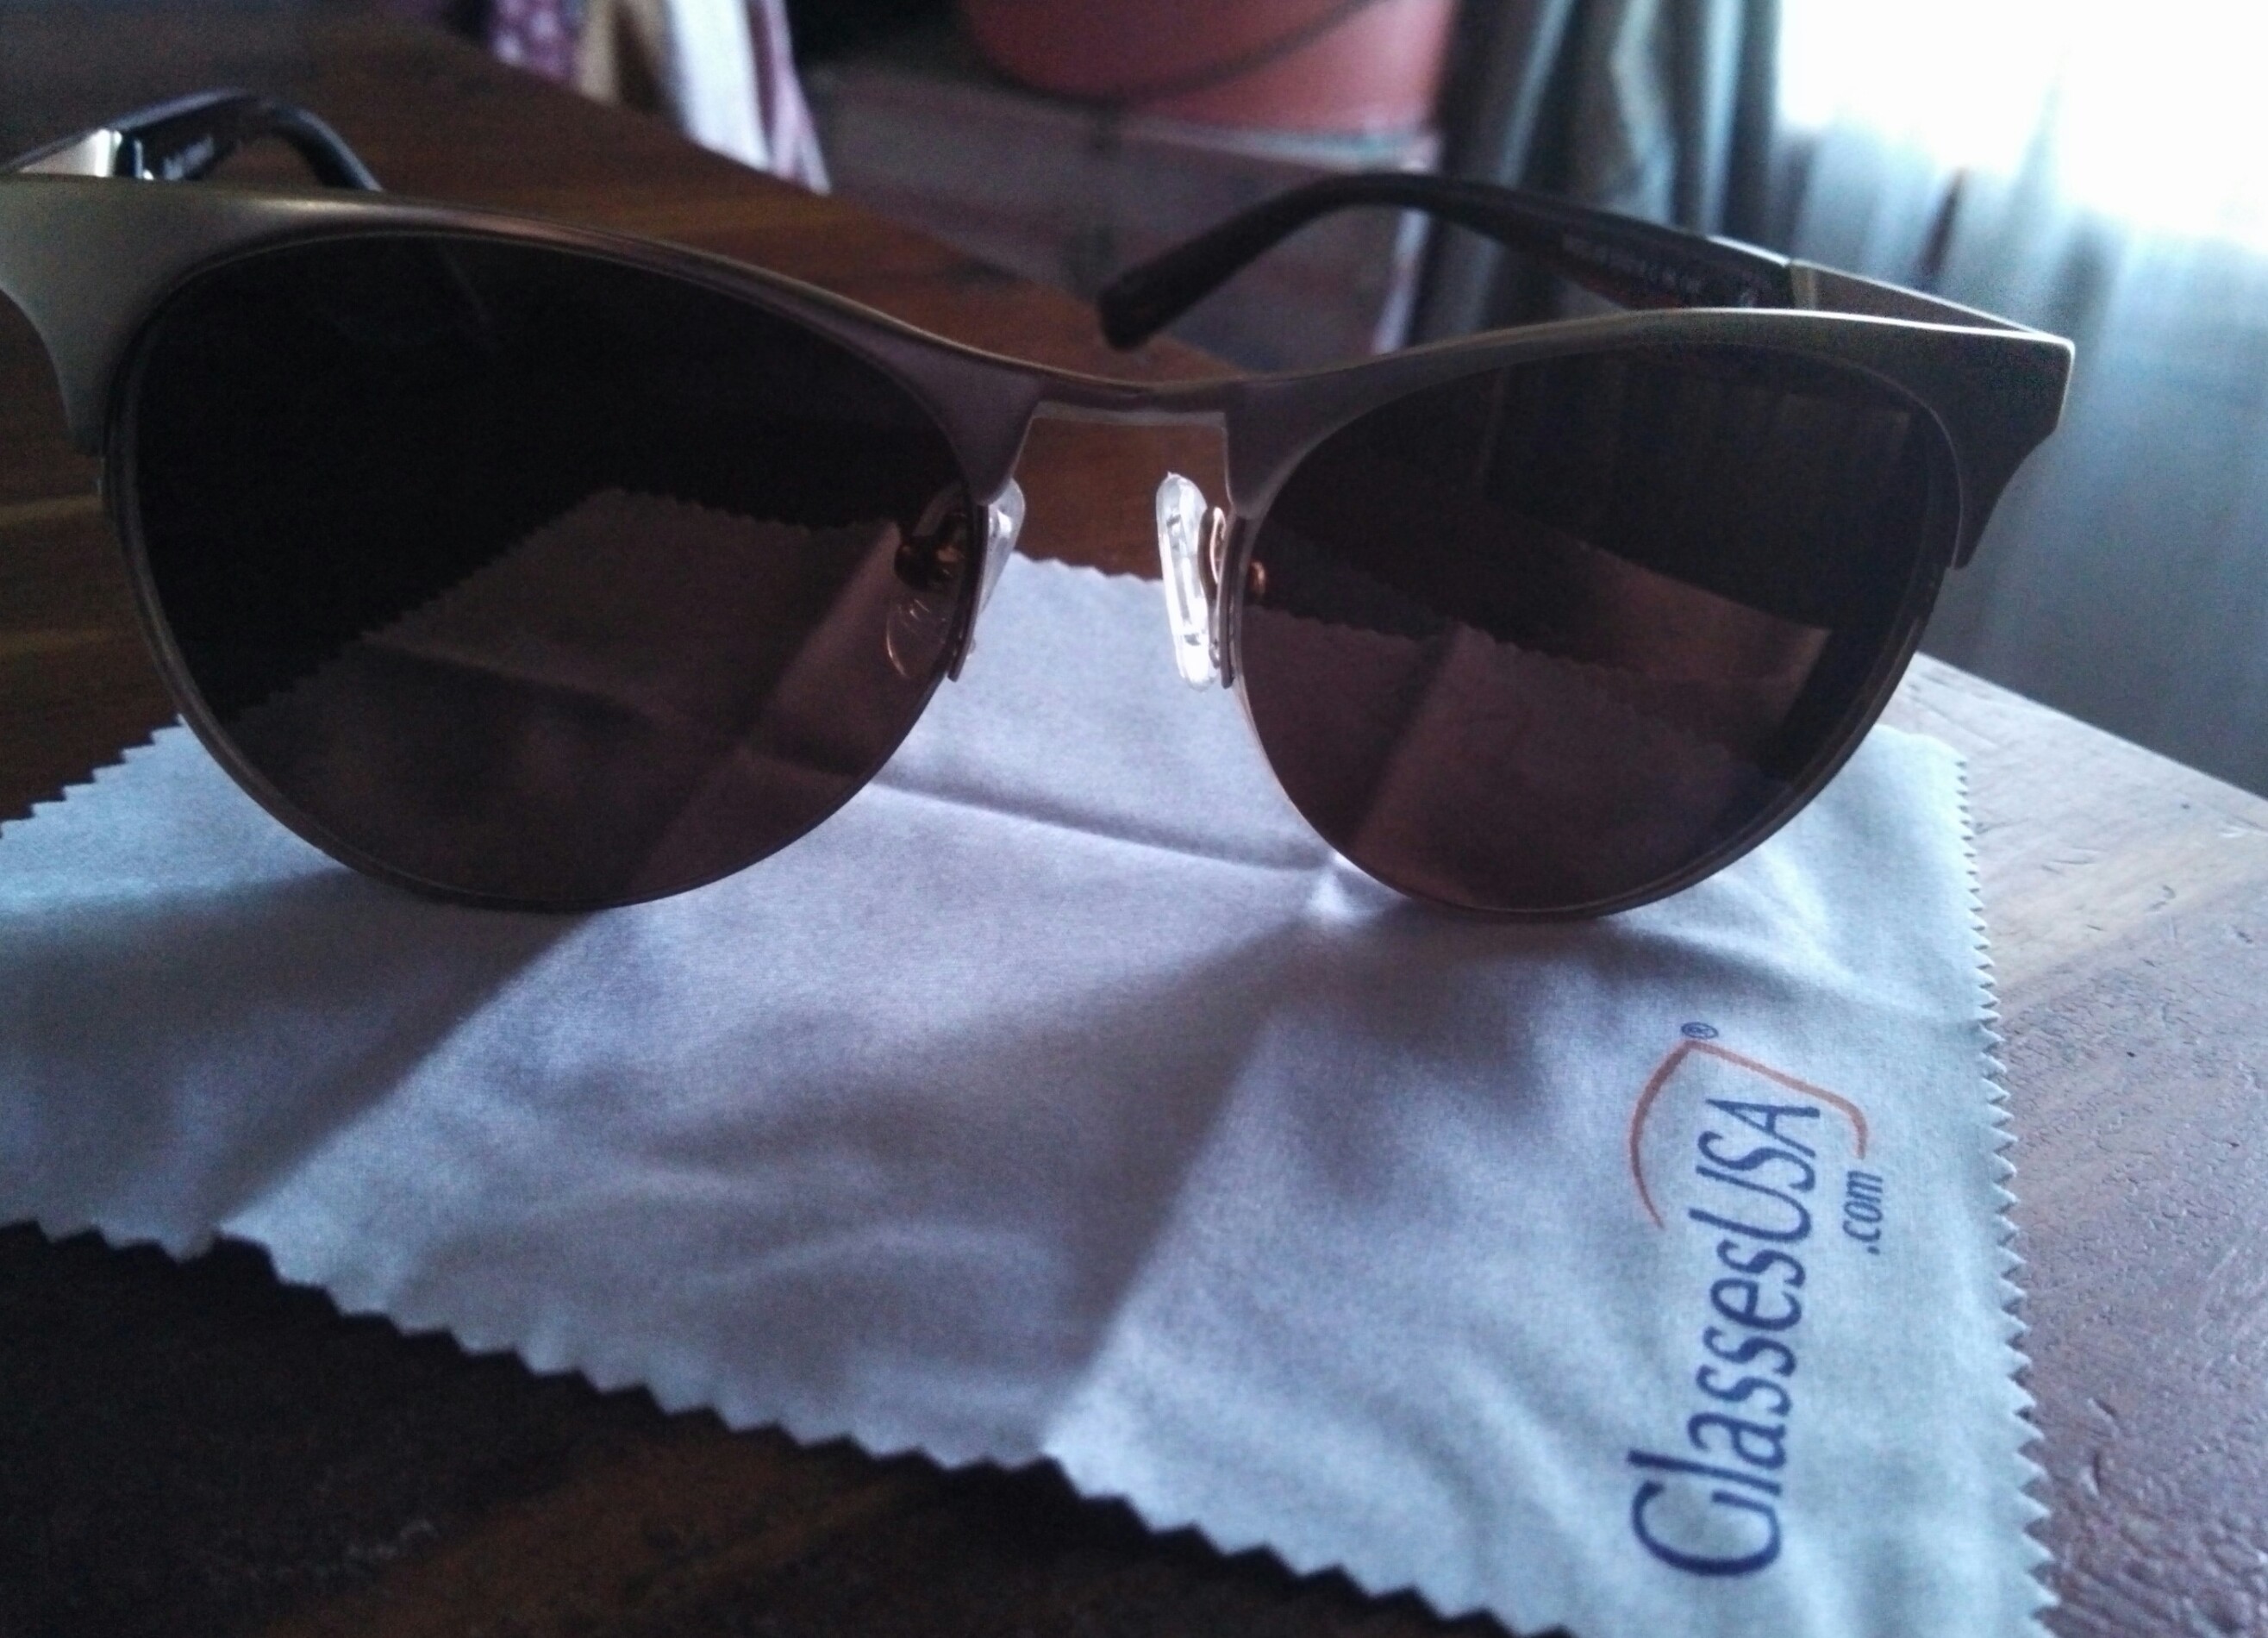 GlassesUSA Sunglasses Review - BB Product Reviews
